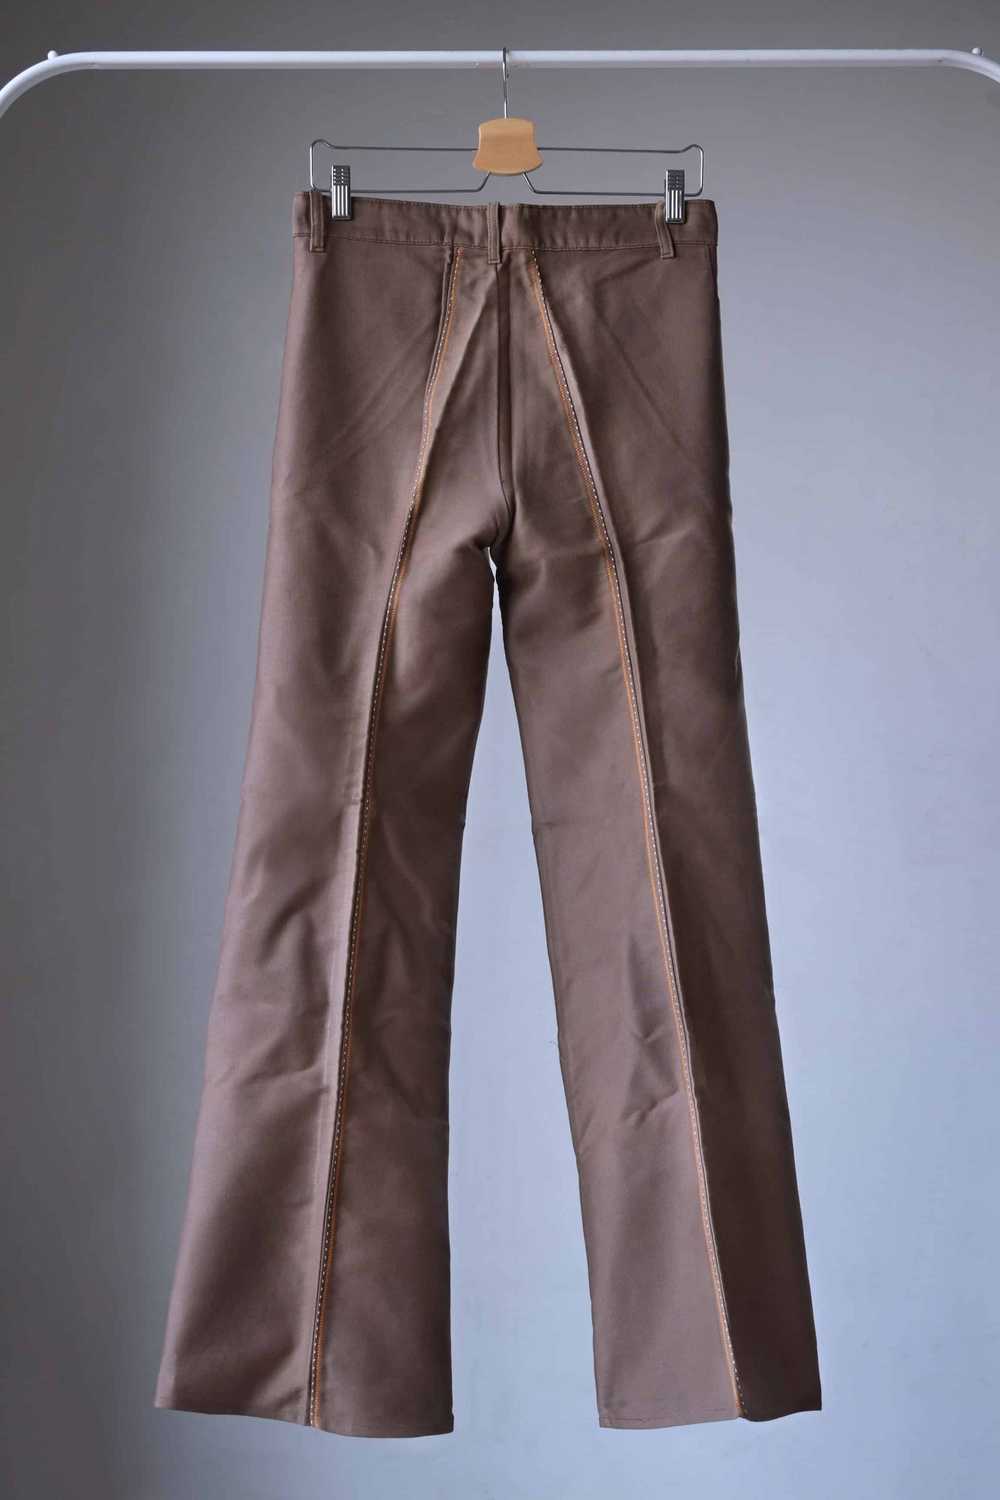 LUCKY PARIS 70's Vintage Flared Pants - image 6